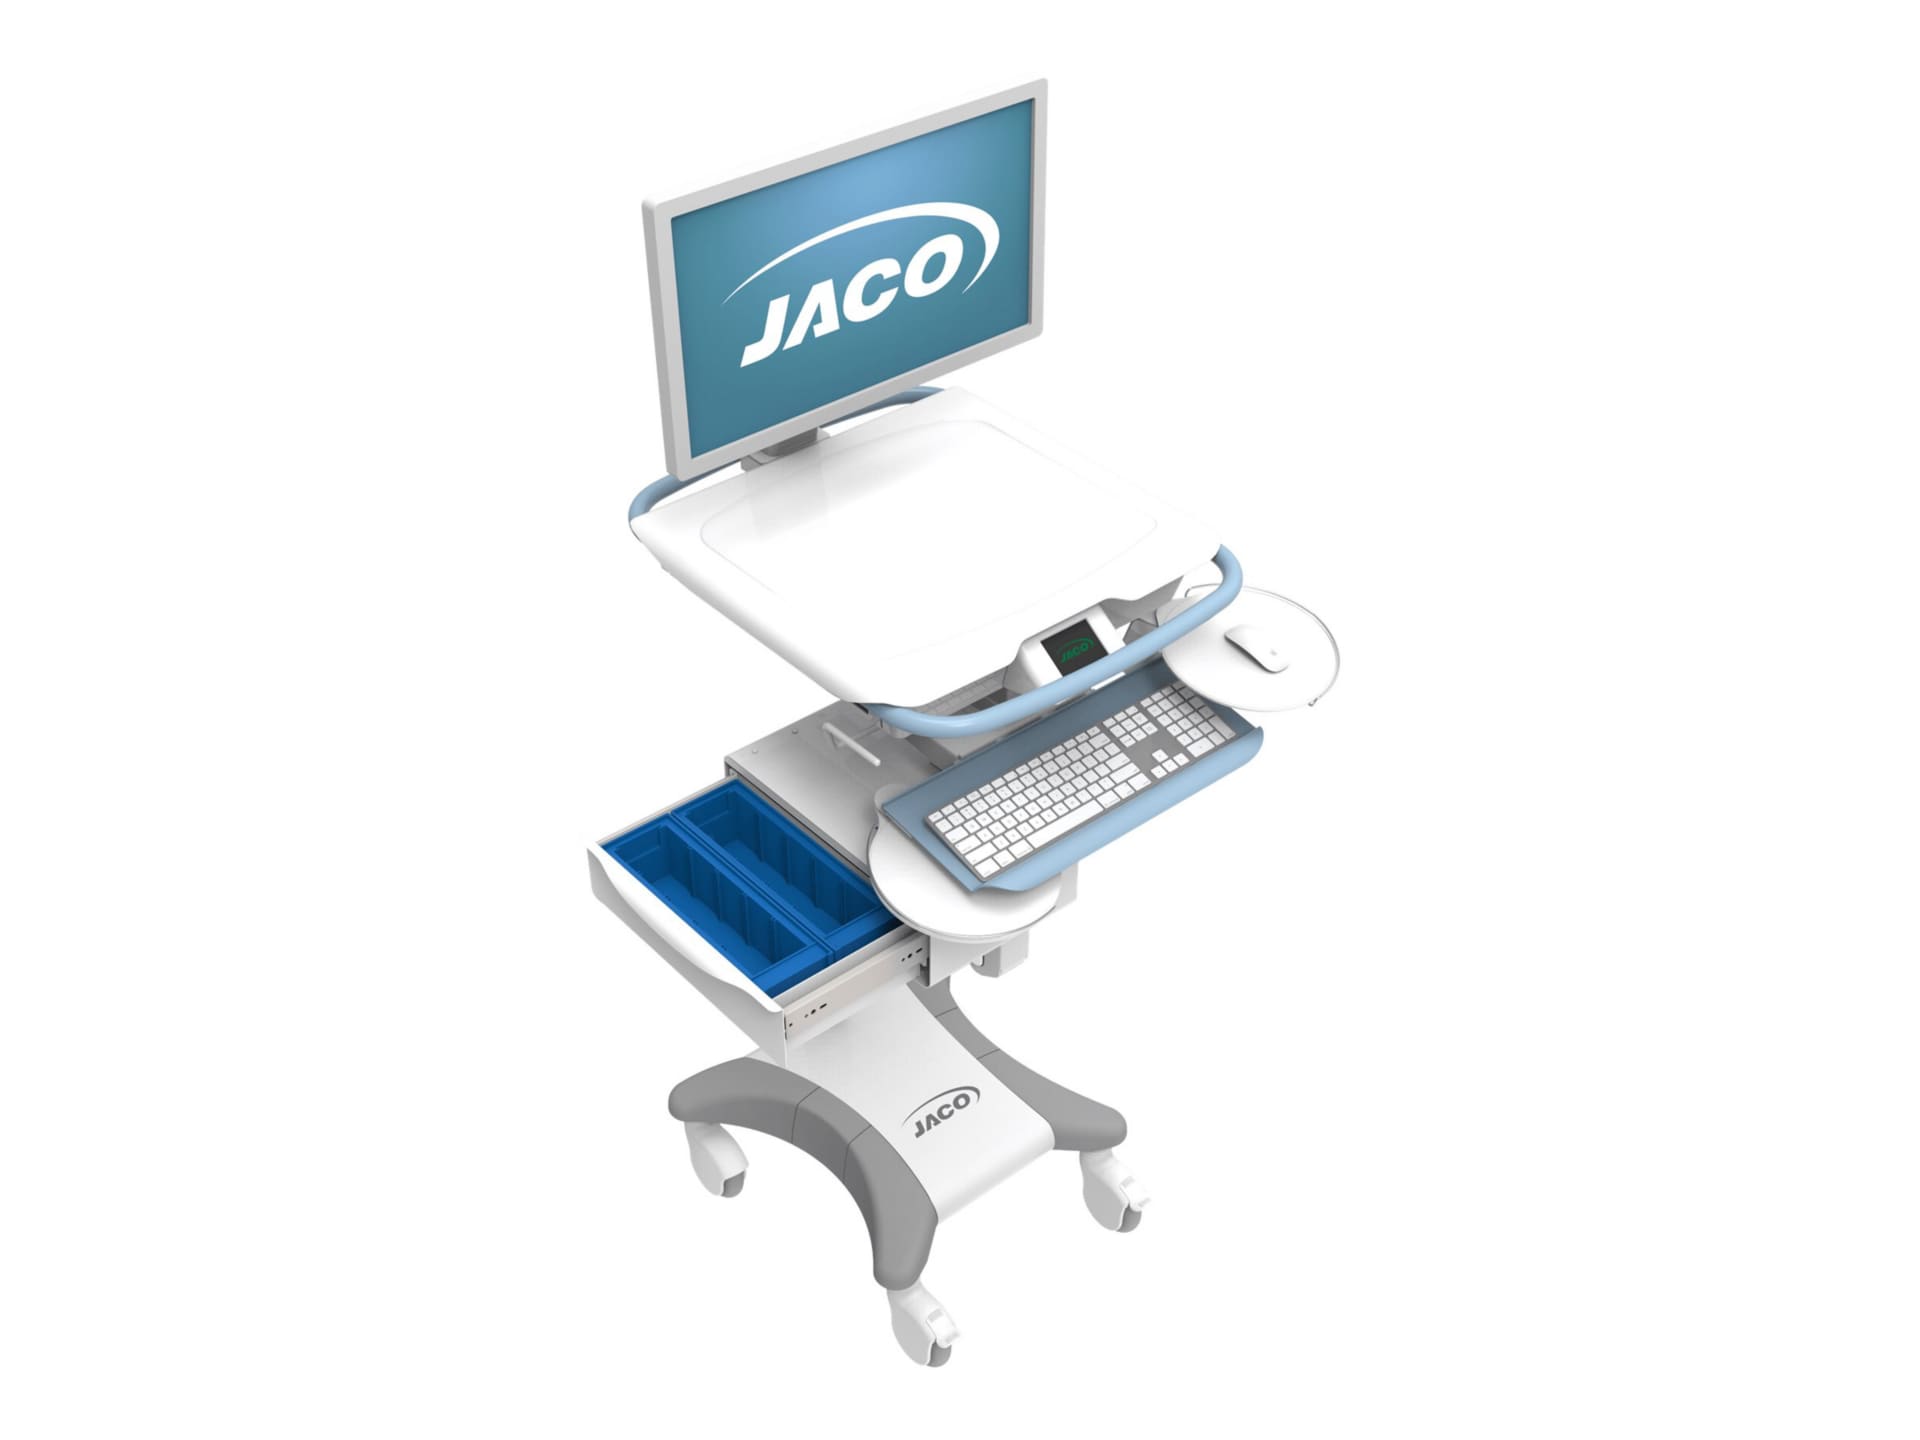 JACO Jaco Storage Bin Kit - mounting component - blue